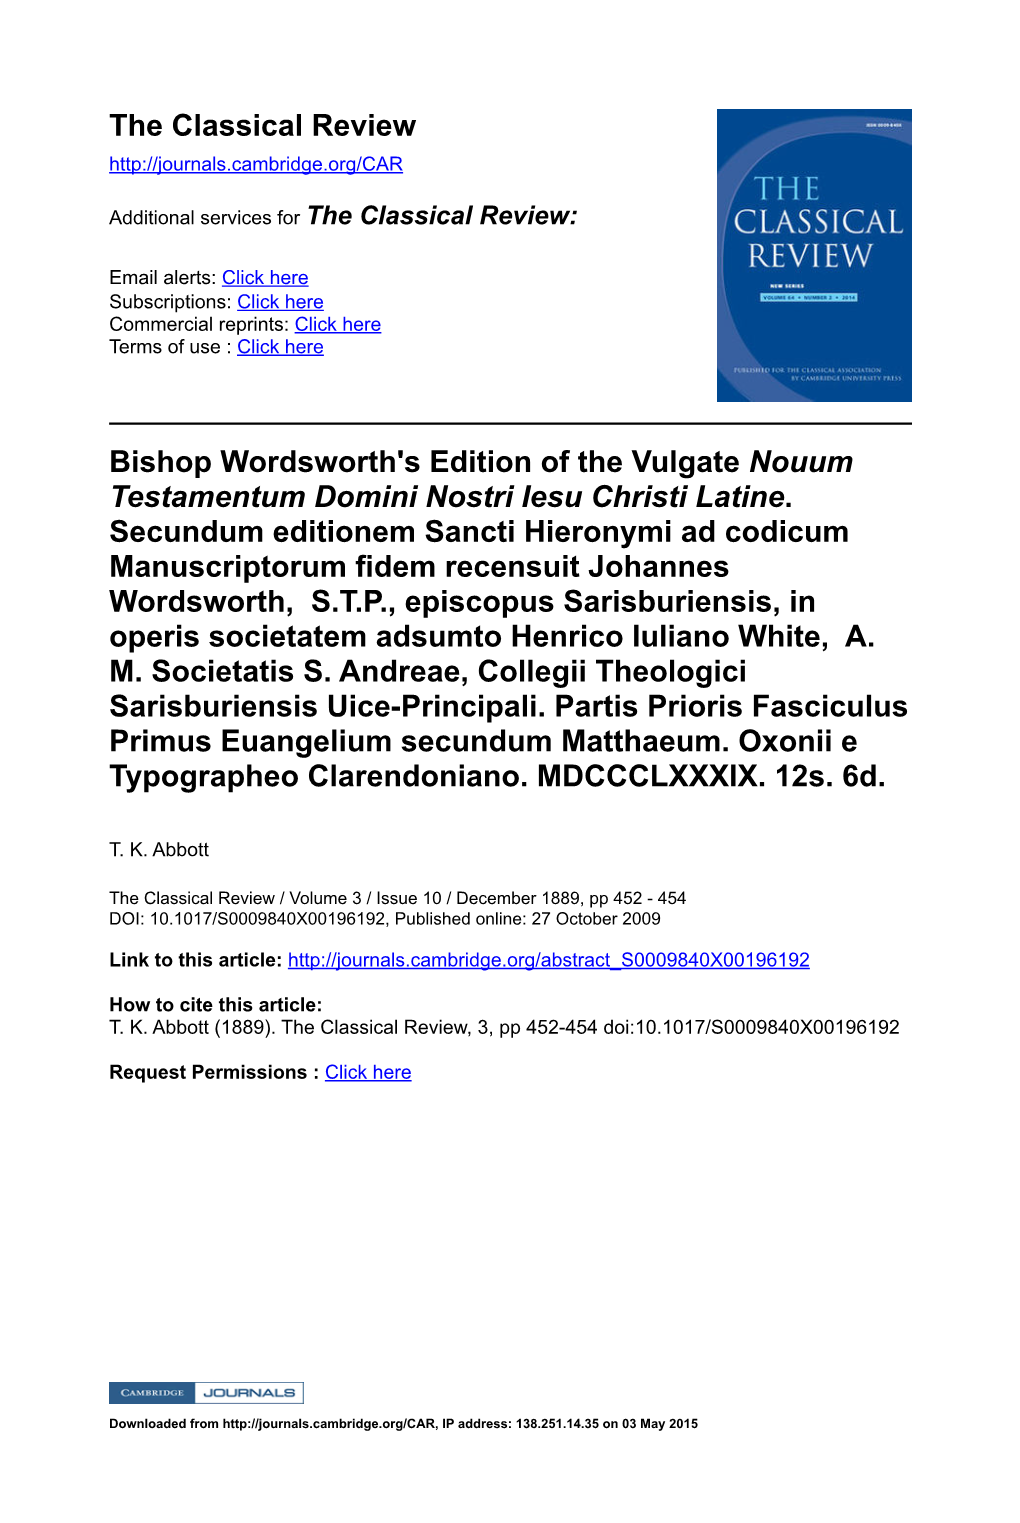 Bishop Wordsworth's Edition of the Vulgate Nouum Testamentum Domini Nostri Iesu Christi Latine